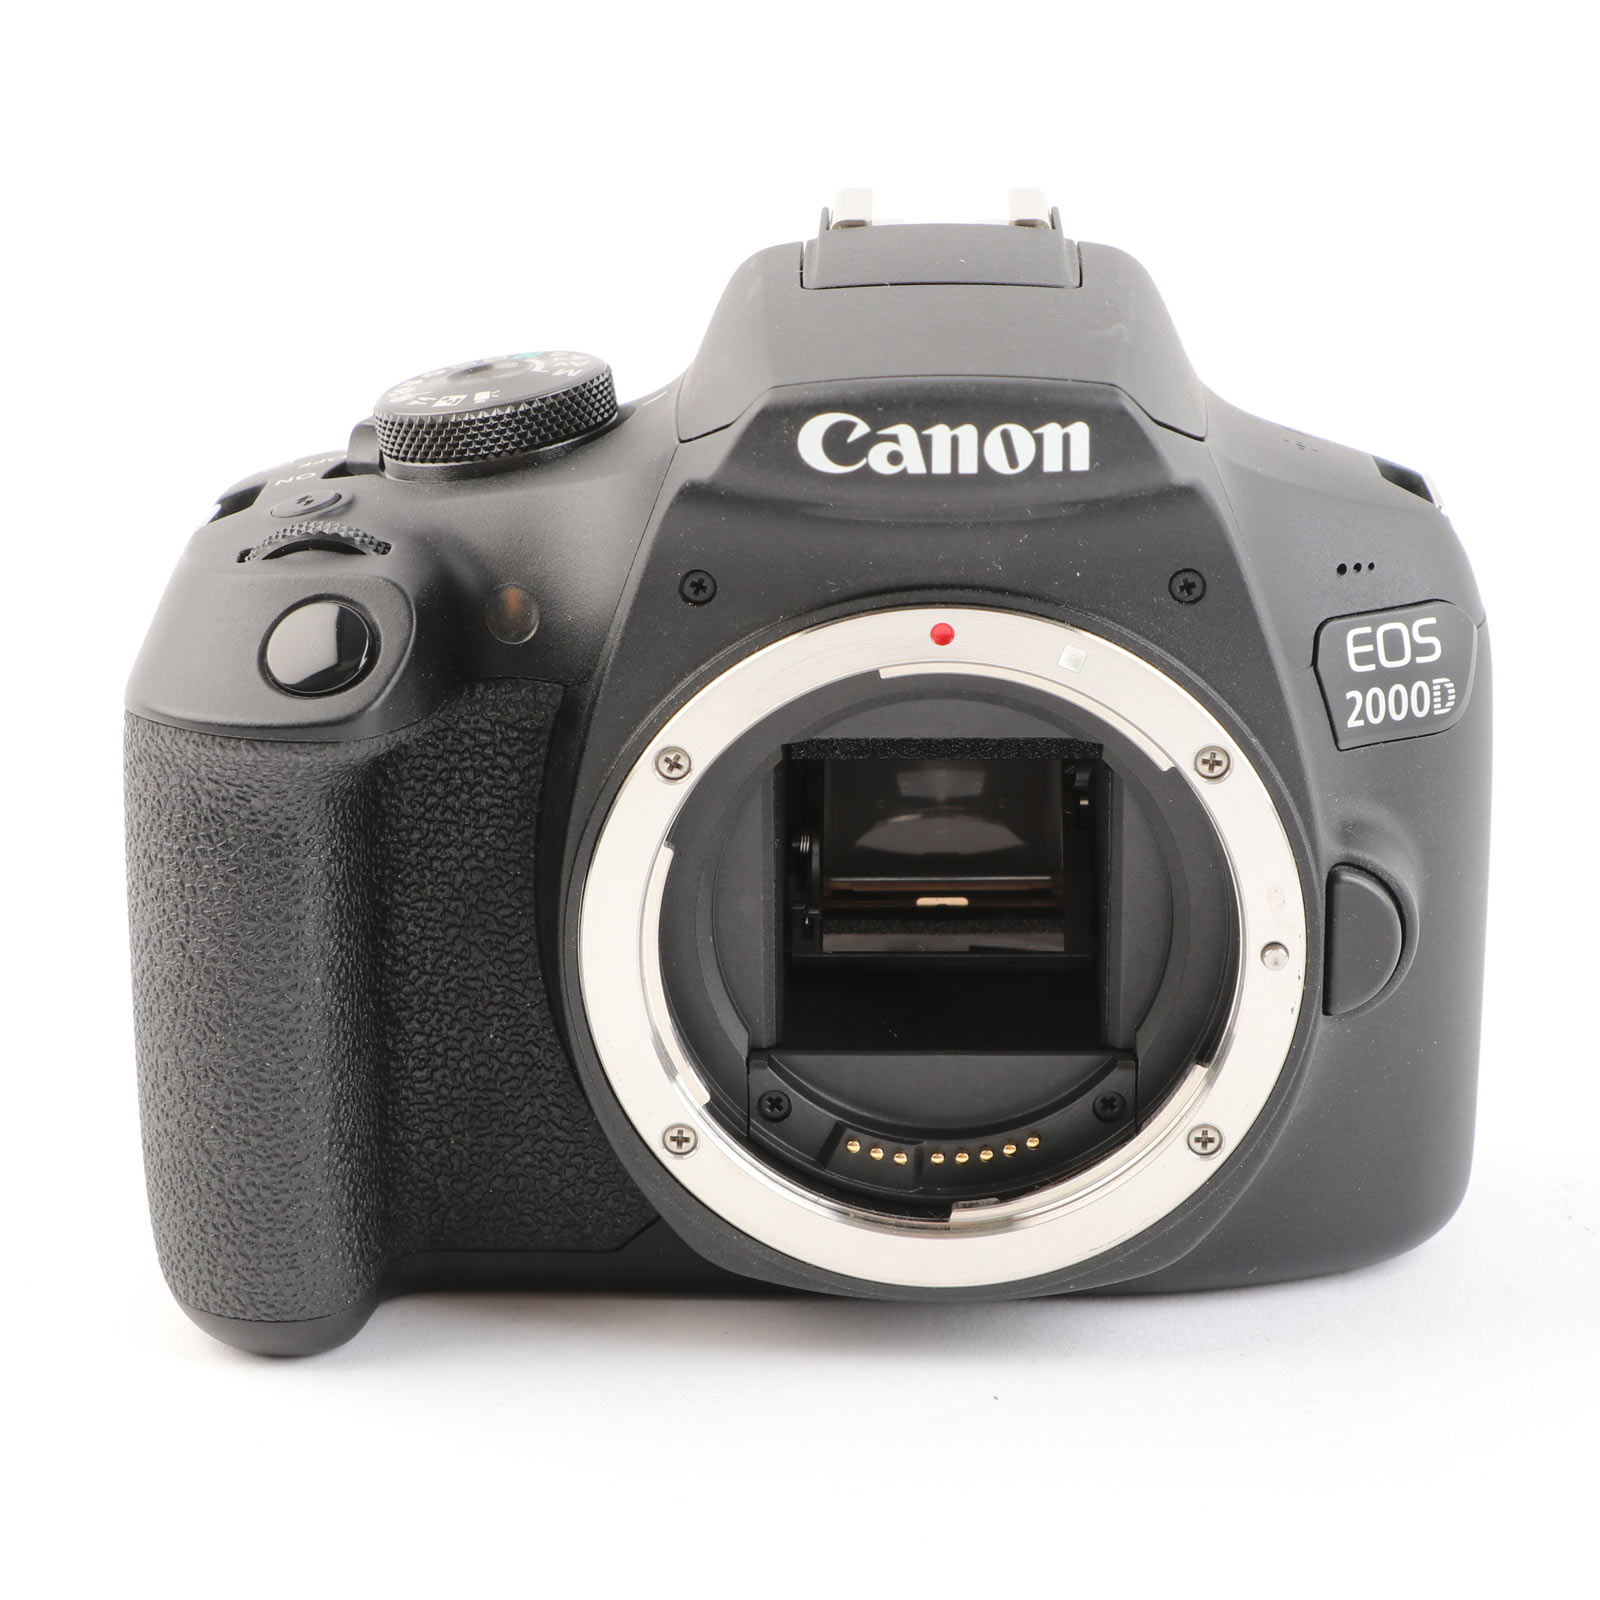 Canon EOS 2000D DSLR: Capture Stunning Images & Videos